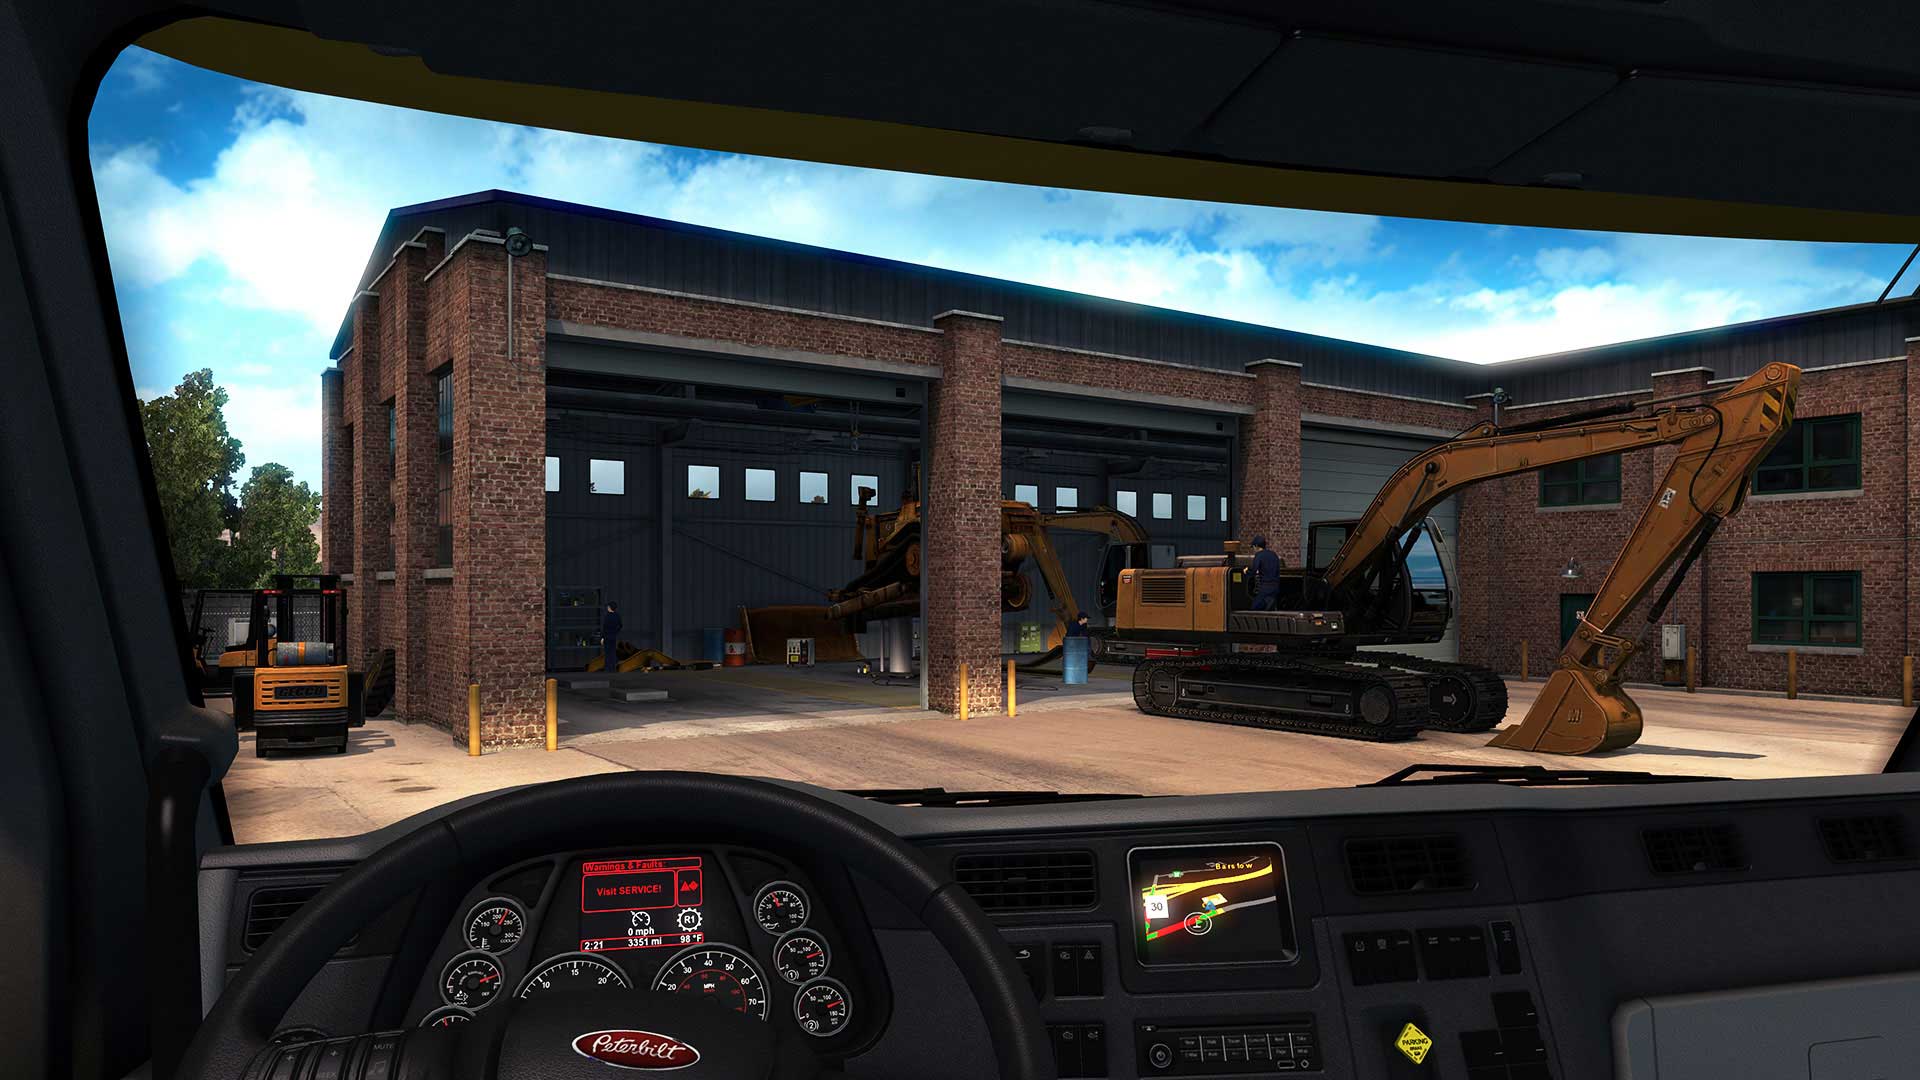 American truck simulator realistic drive compilations